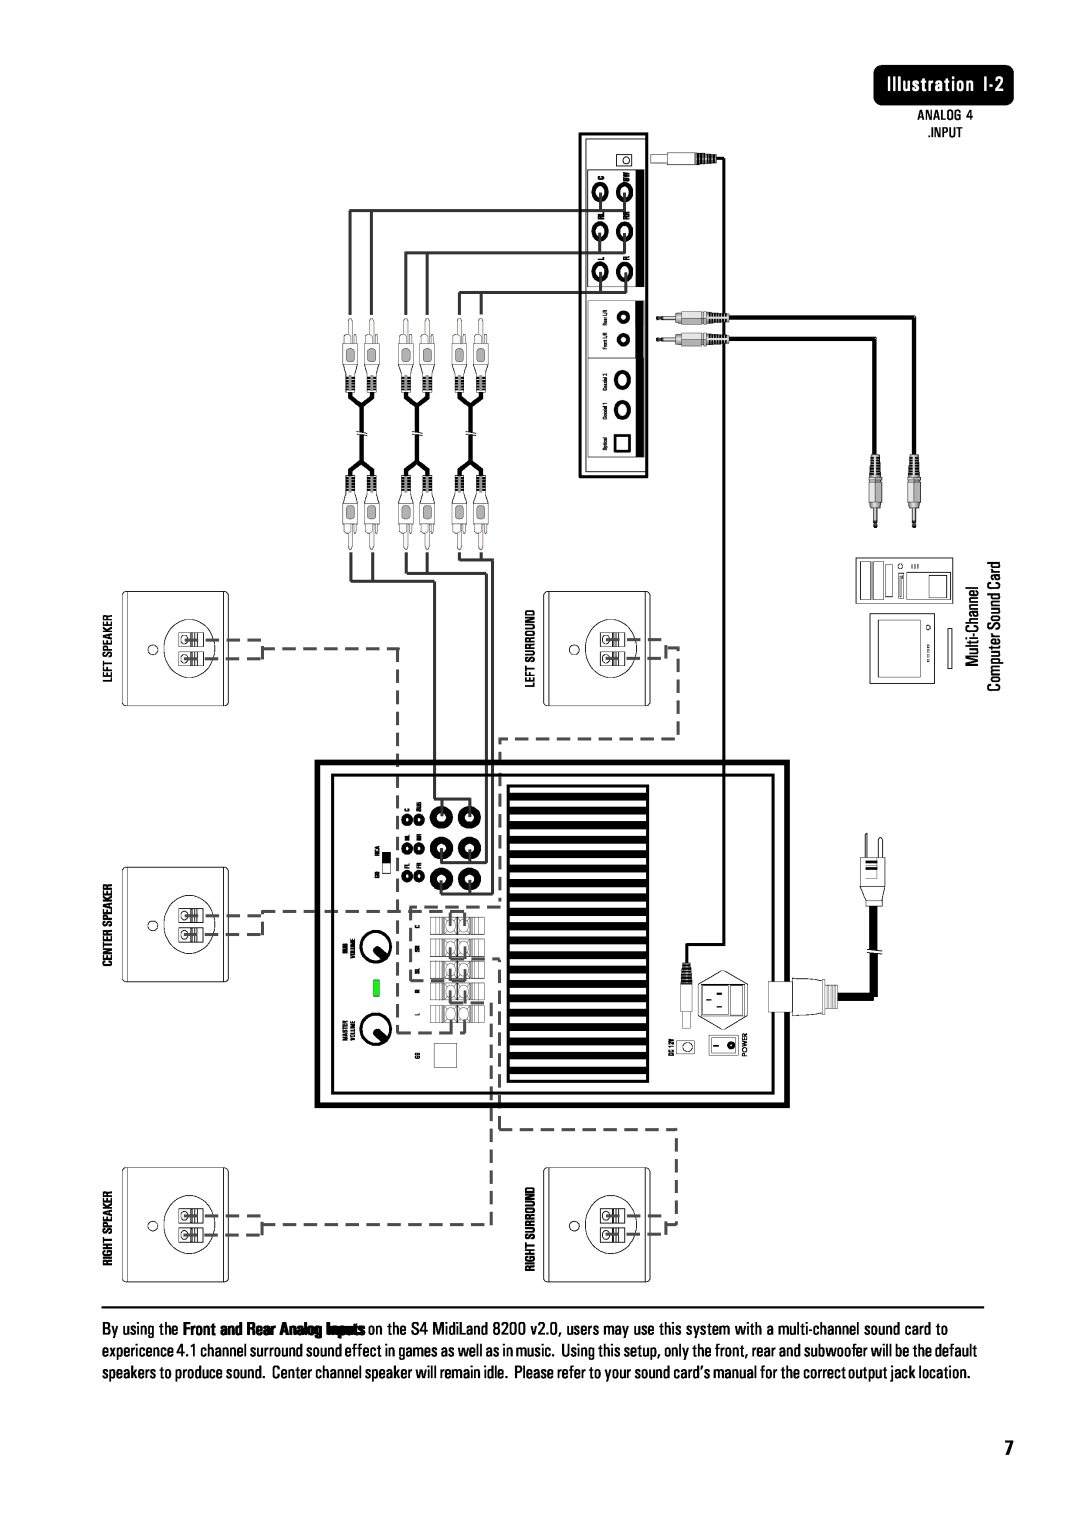 MidiLand 8200 owner manual Illustration, Computer Sound Card Multi-Channel 